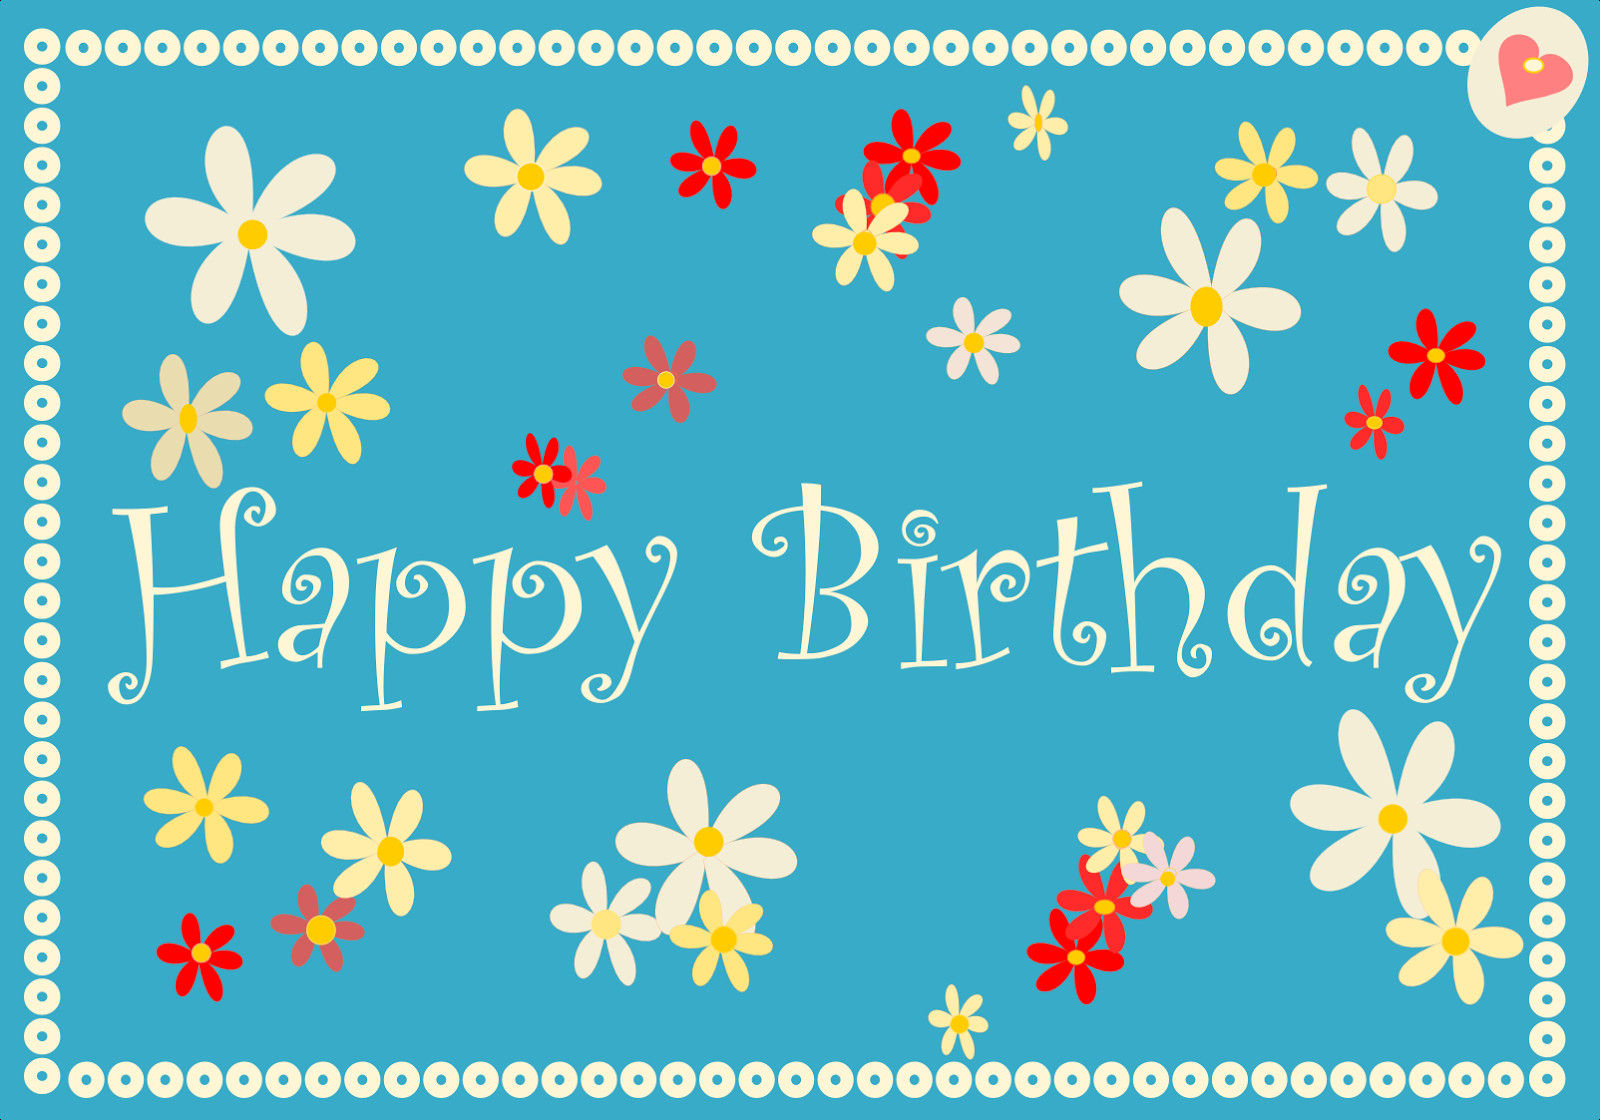 Printable Free Birthday Cards
 free printable Happy Birthday Cards – ausdruckbare